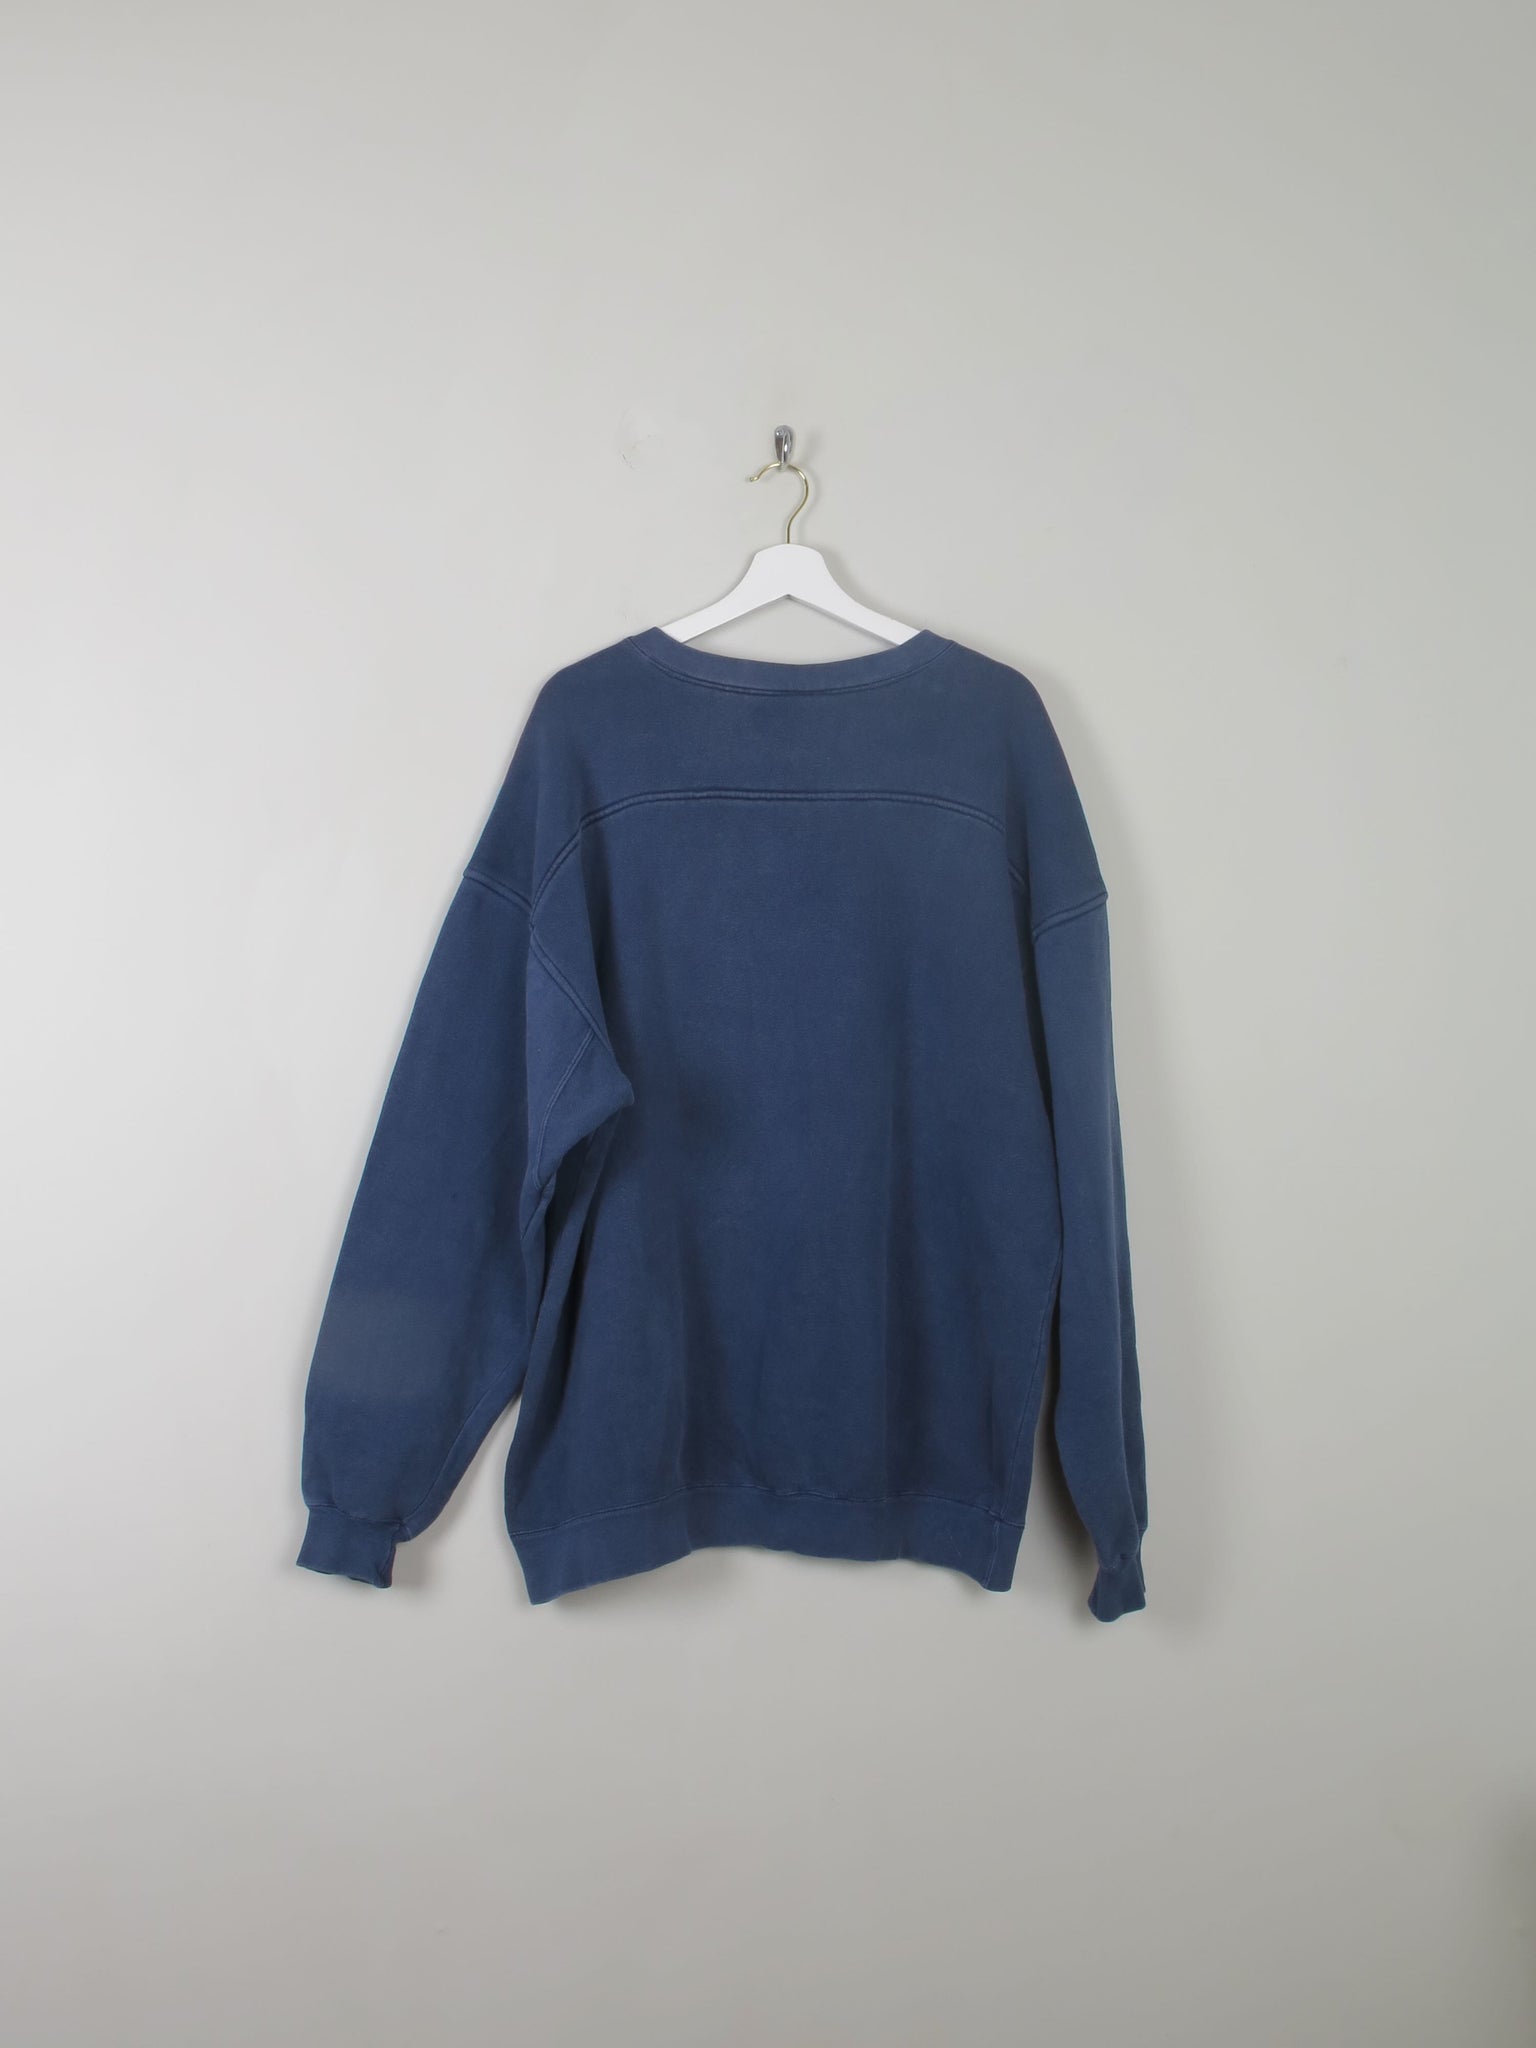 Men's Vintage Navy Embroidered Sweatshirt L/XL - The Harlequin